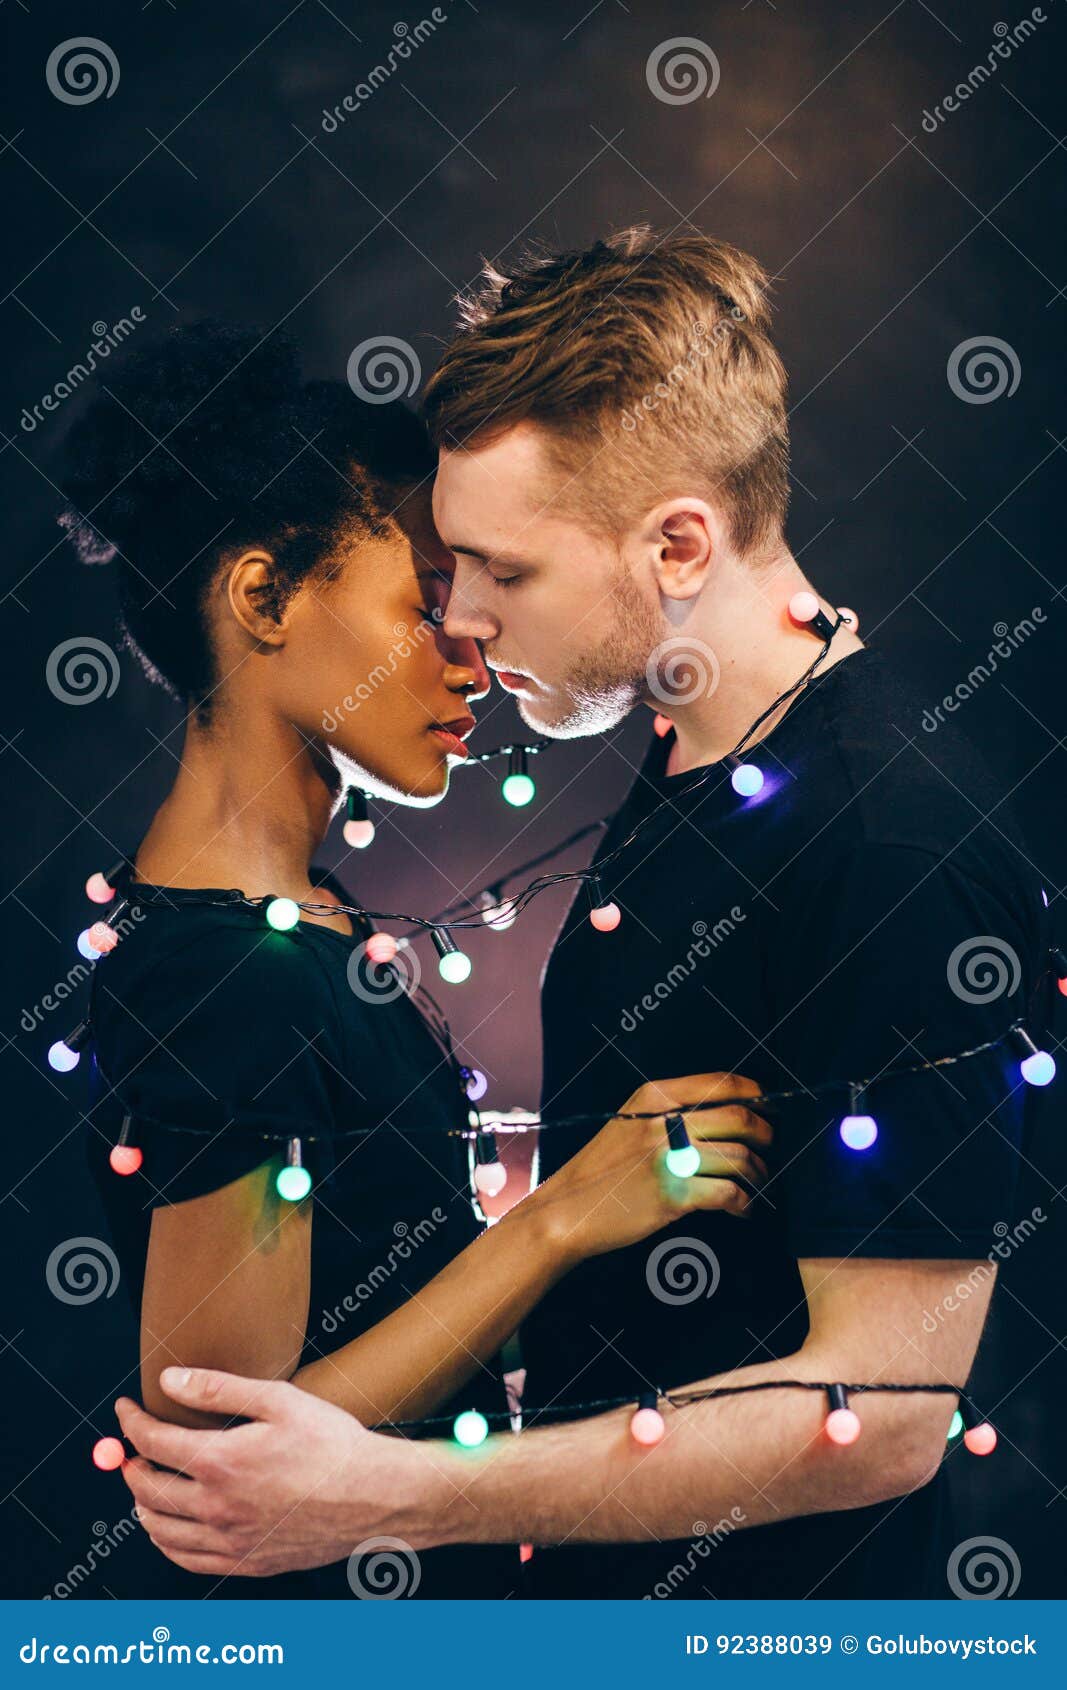 Men women romance black white Meet Black